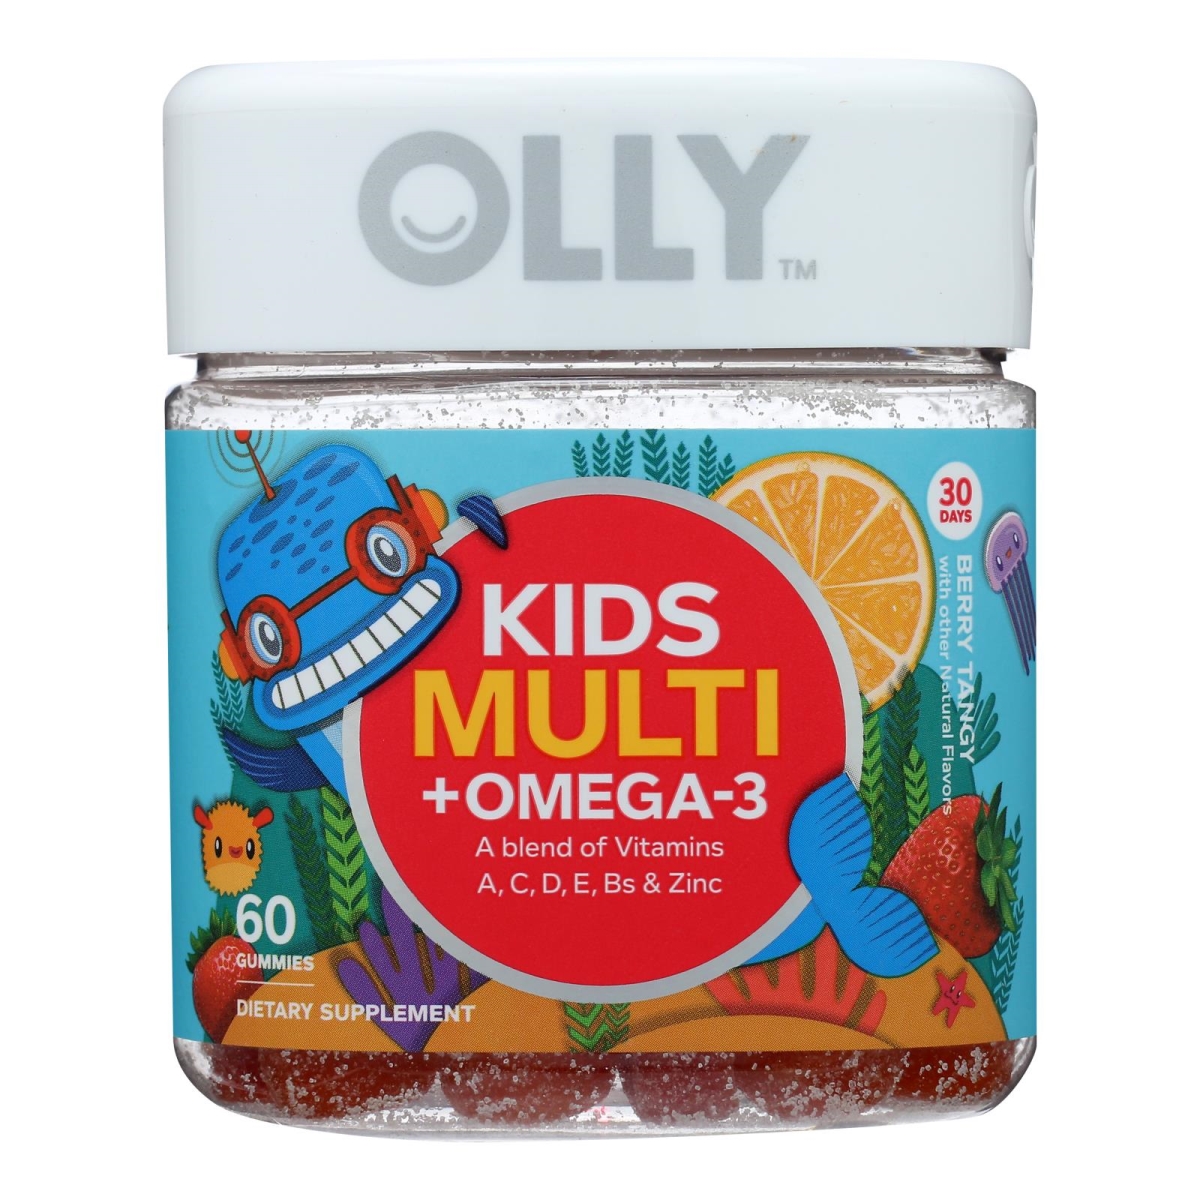 2463438 Kids Multivitamins Omega-3 Dietary Supplement Gummies, 60 Count